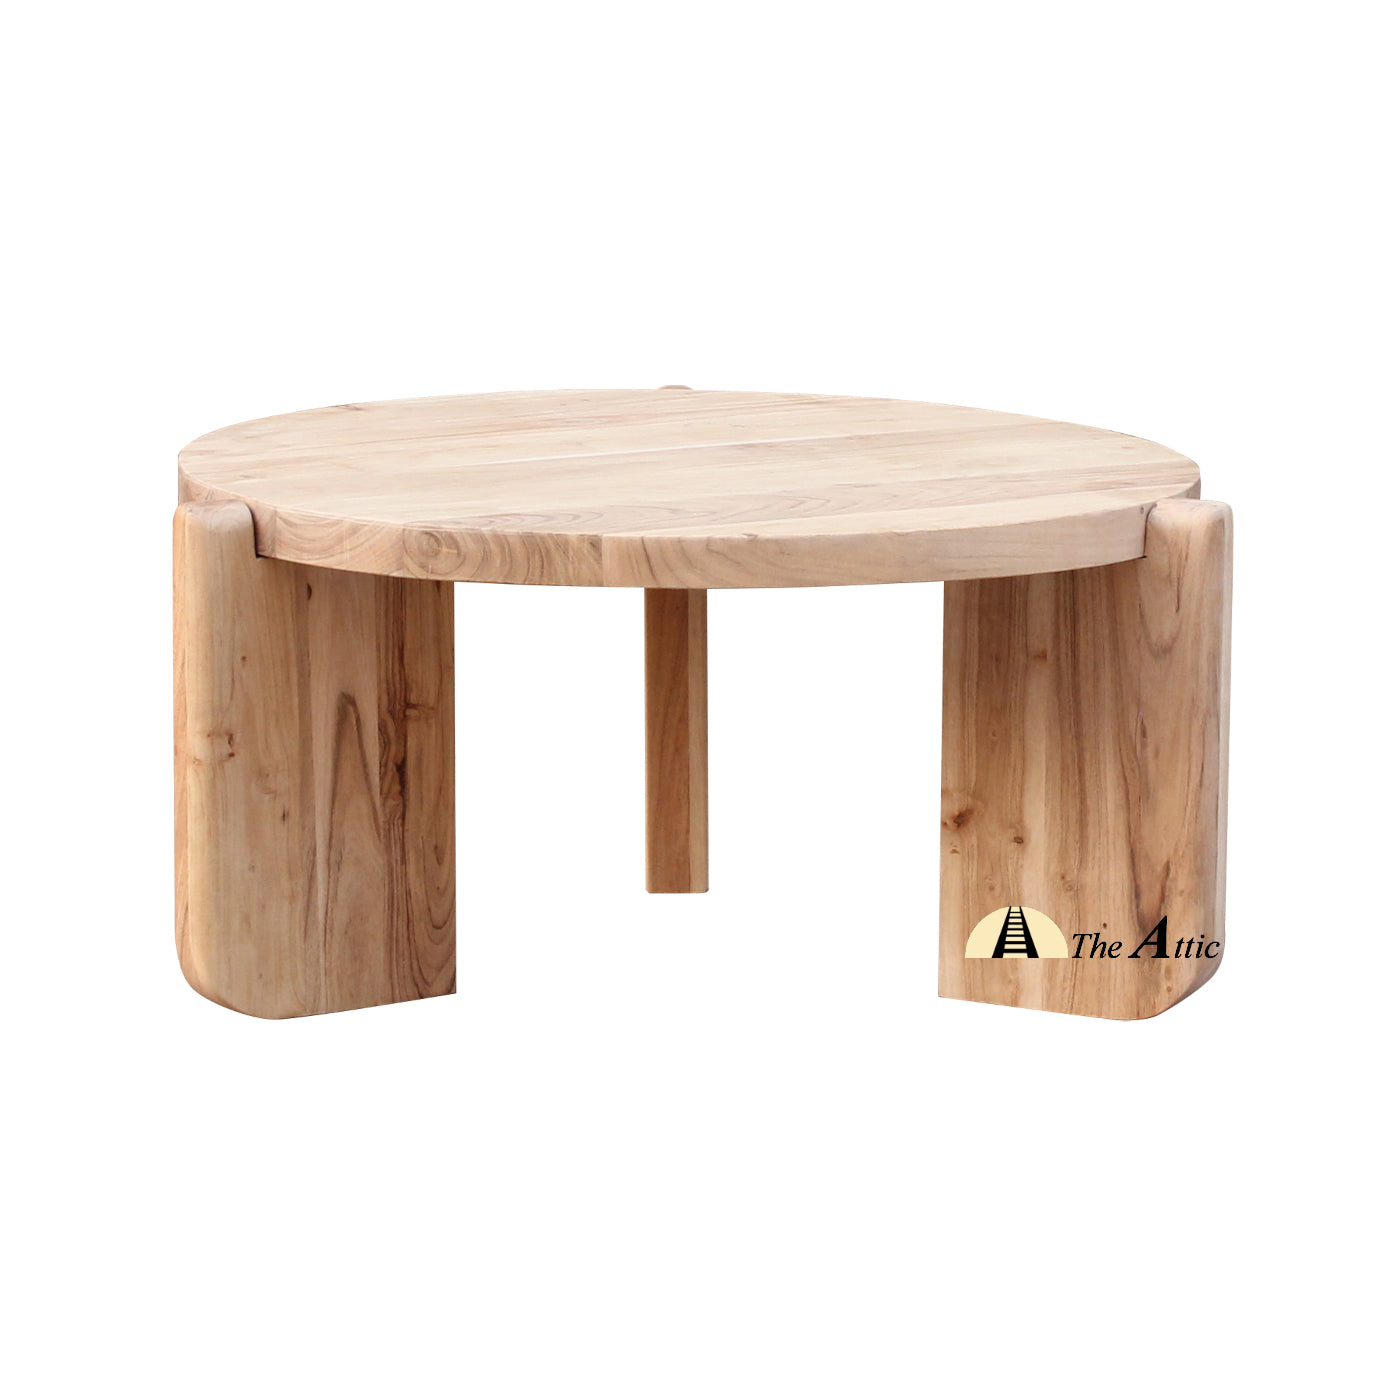 Kota Modern Solid Wood Lodge Round Edge Coffee Table, Centre Table - The Attic Dubai